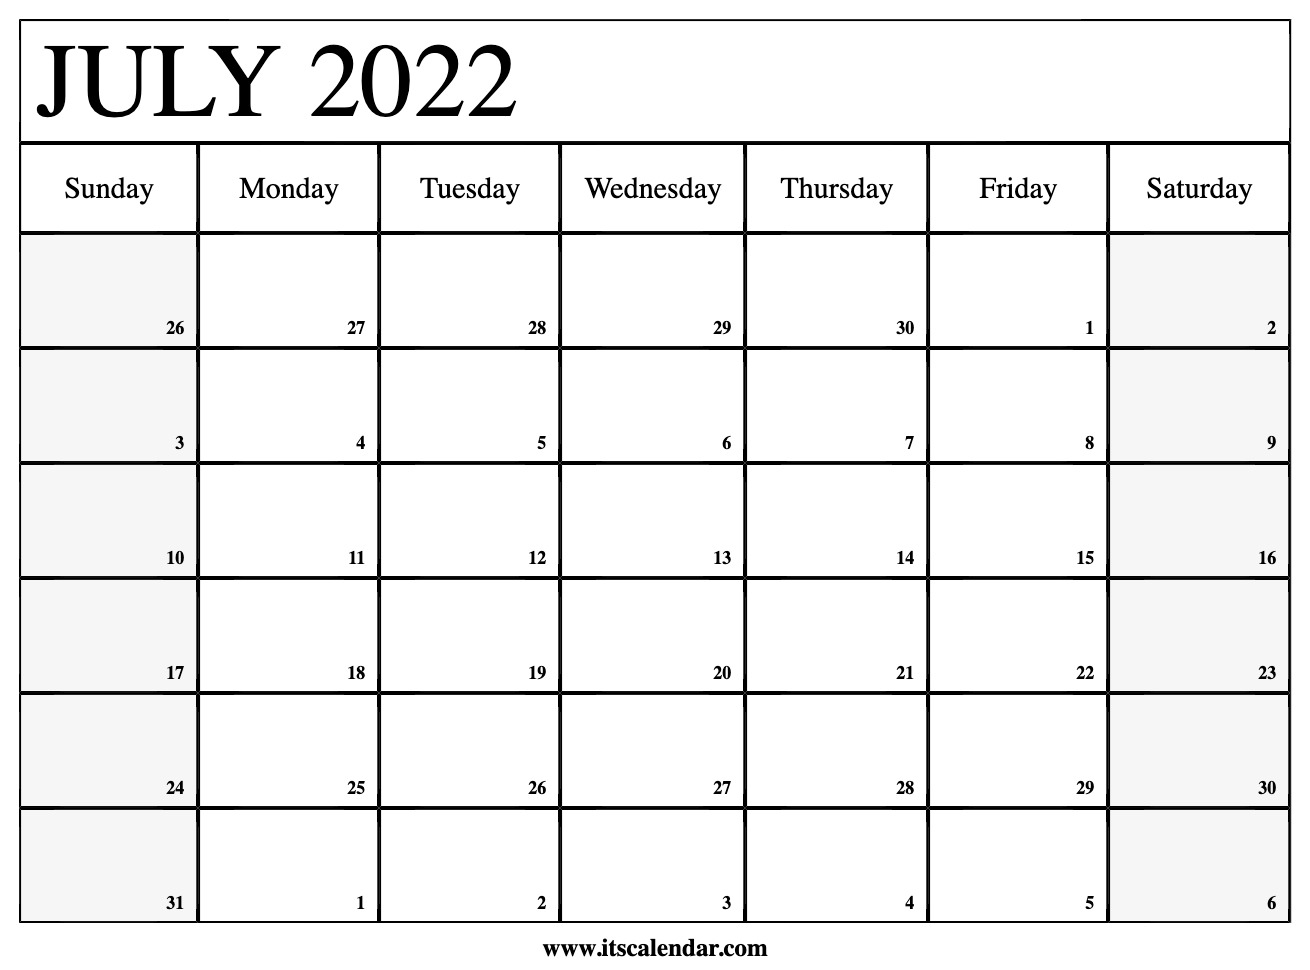 Дни недели июль 2022